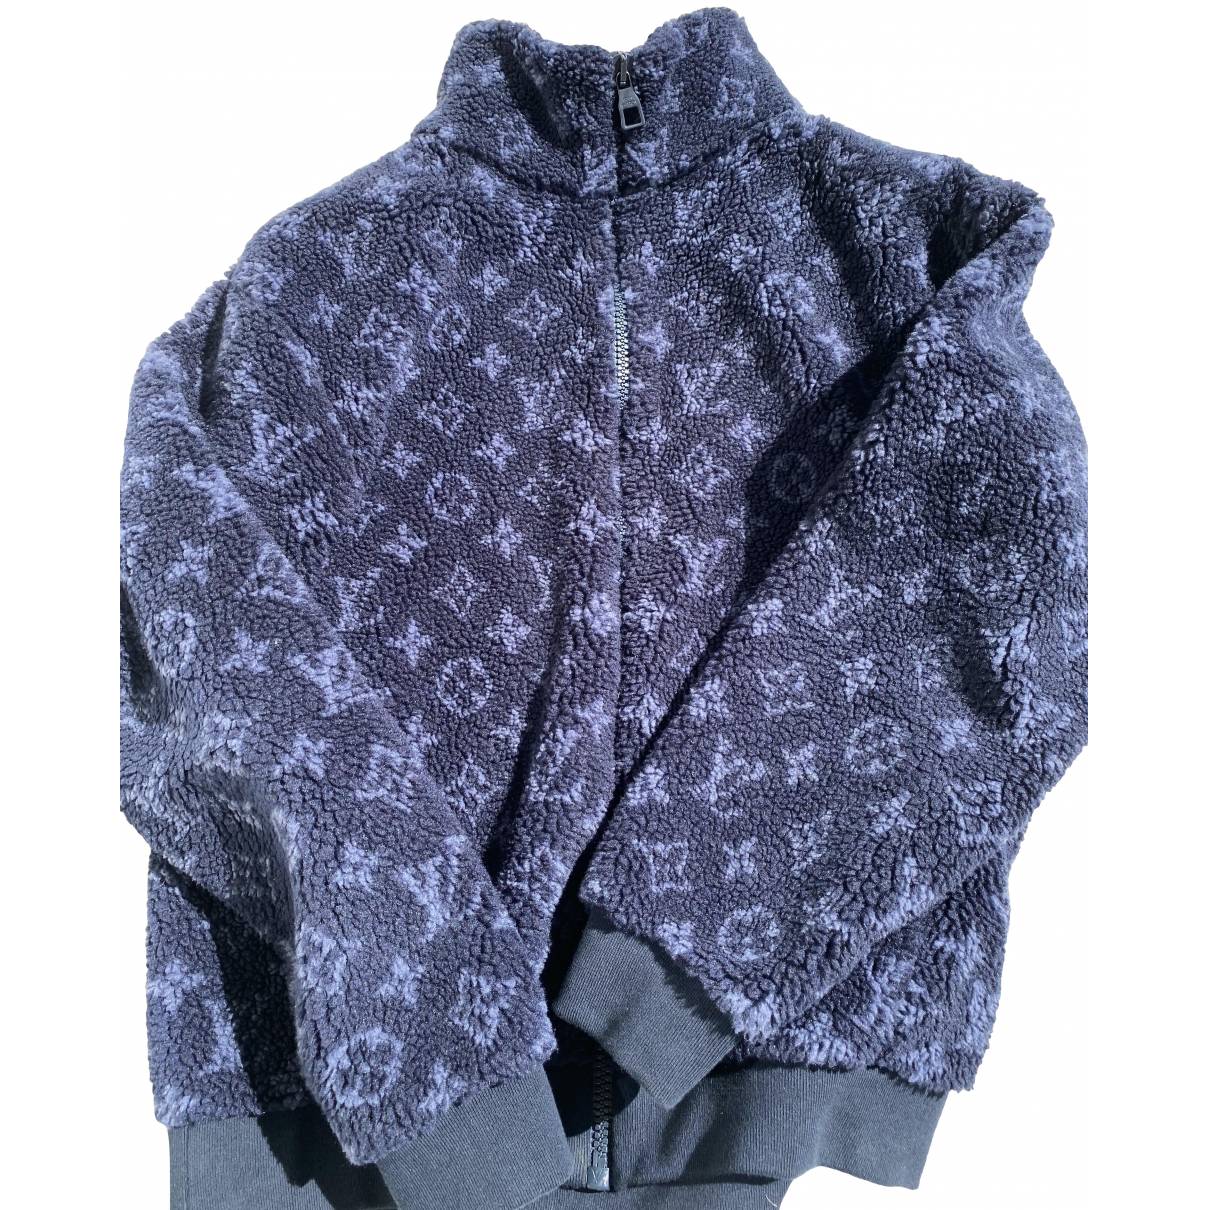 Cozy black faux fur zipper jacket with white LV monograms